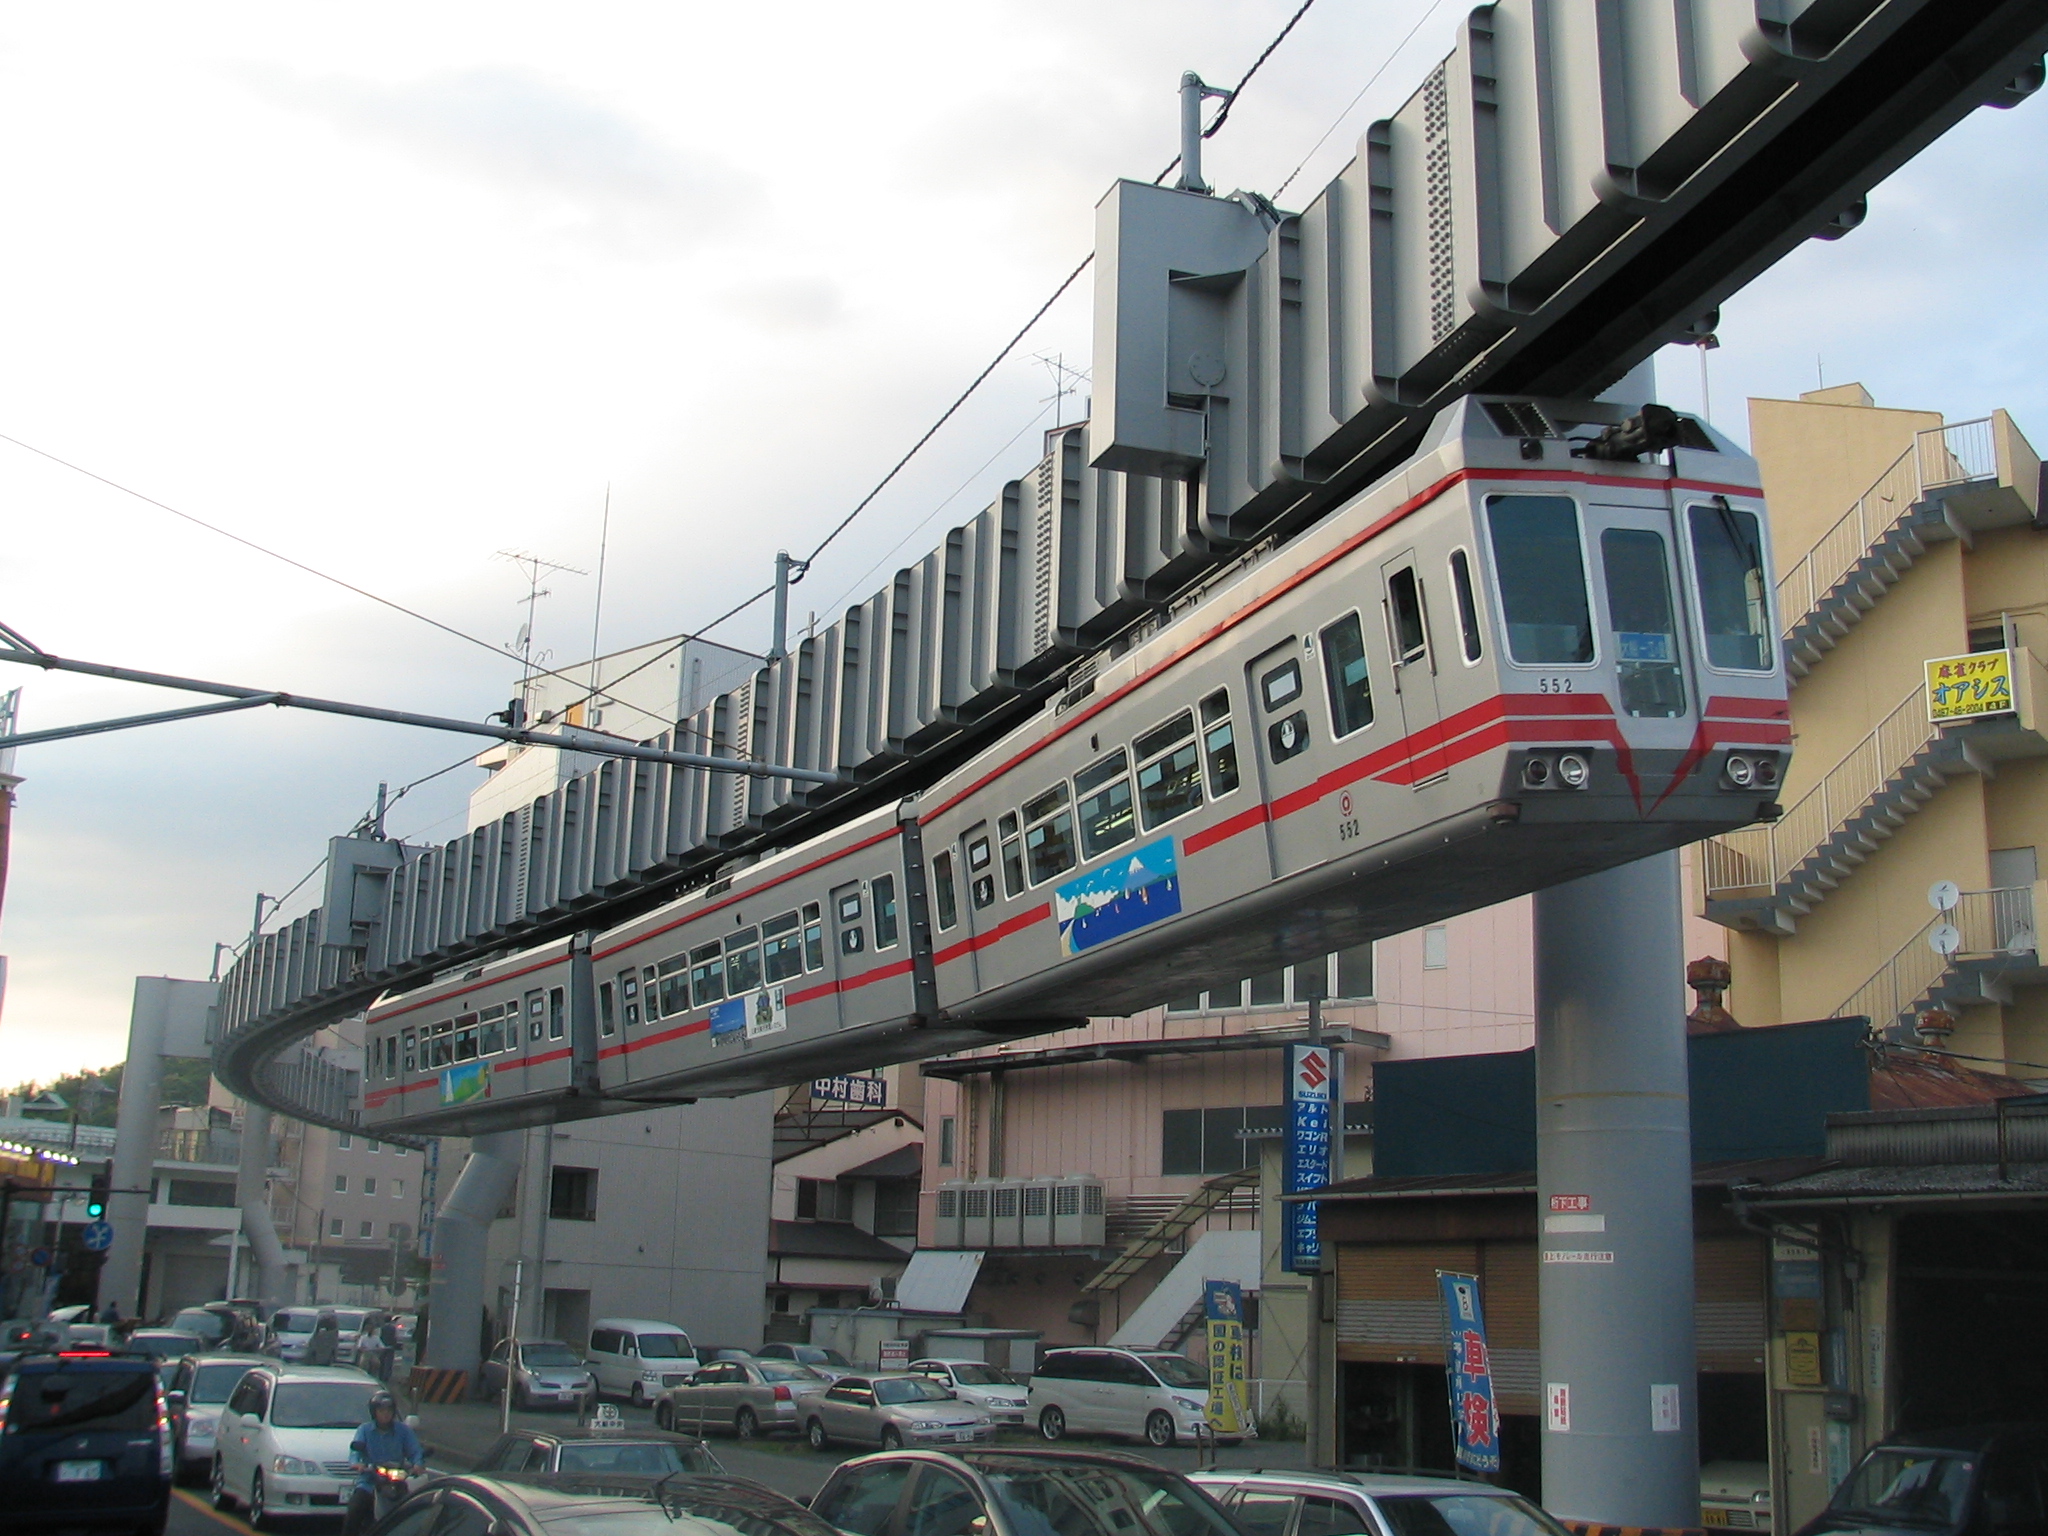 File:Shonan monorail type 500.JPG - Wikimedia Commons